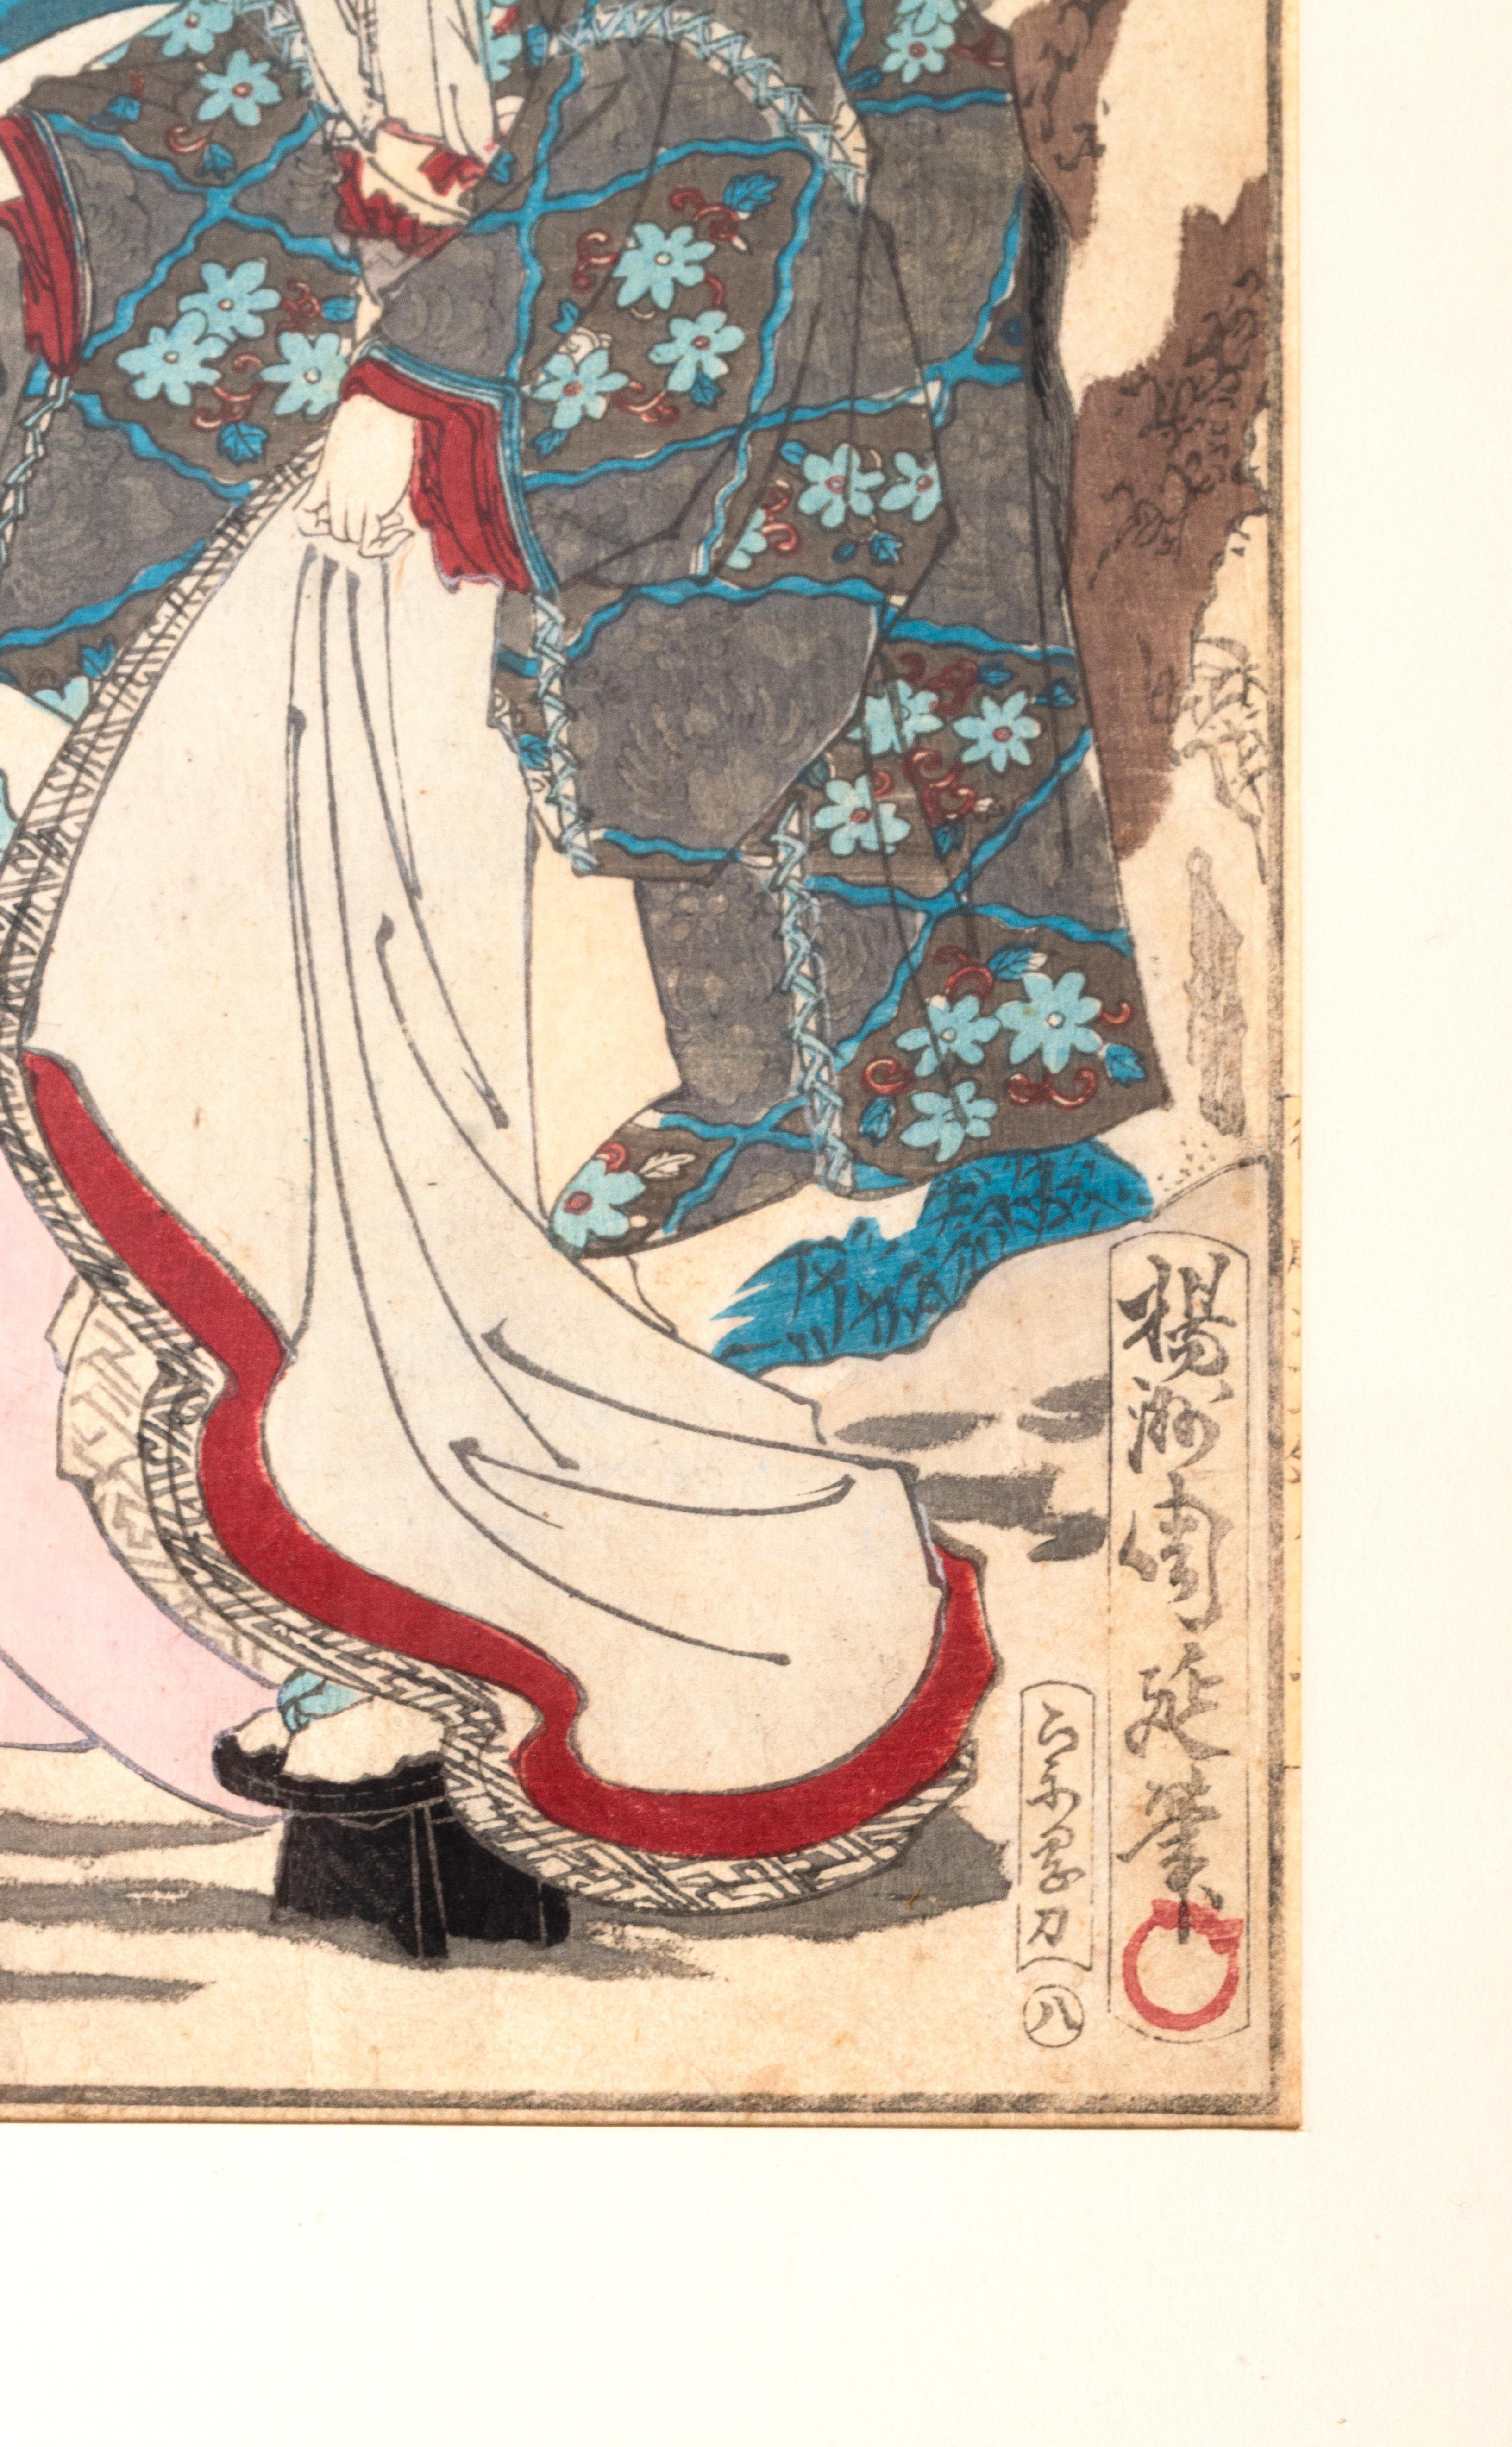 Framed Japanese 19th Century Meiji Woodblock Print By Toyohana Chikanobu

Original Woodcut by Chikanobu Toyoharu.(1838 - 1912)
Published in 1884

'Setsugekka' Meiji print series (Snow, Moon and Flower)
Princess Chujo being chastised in the